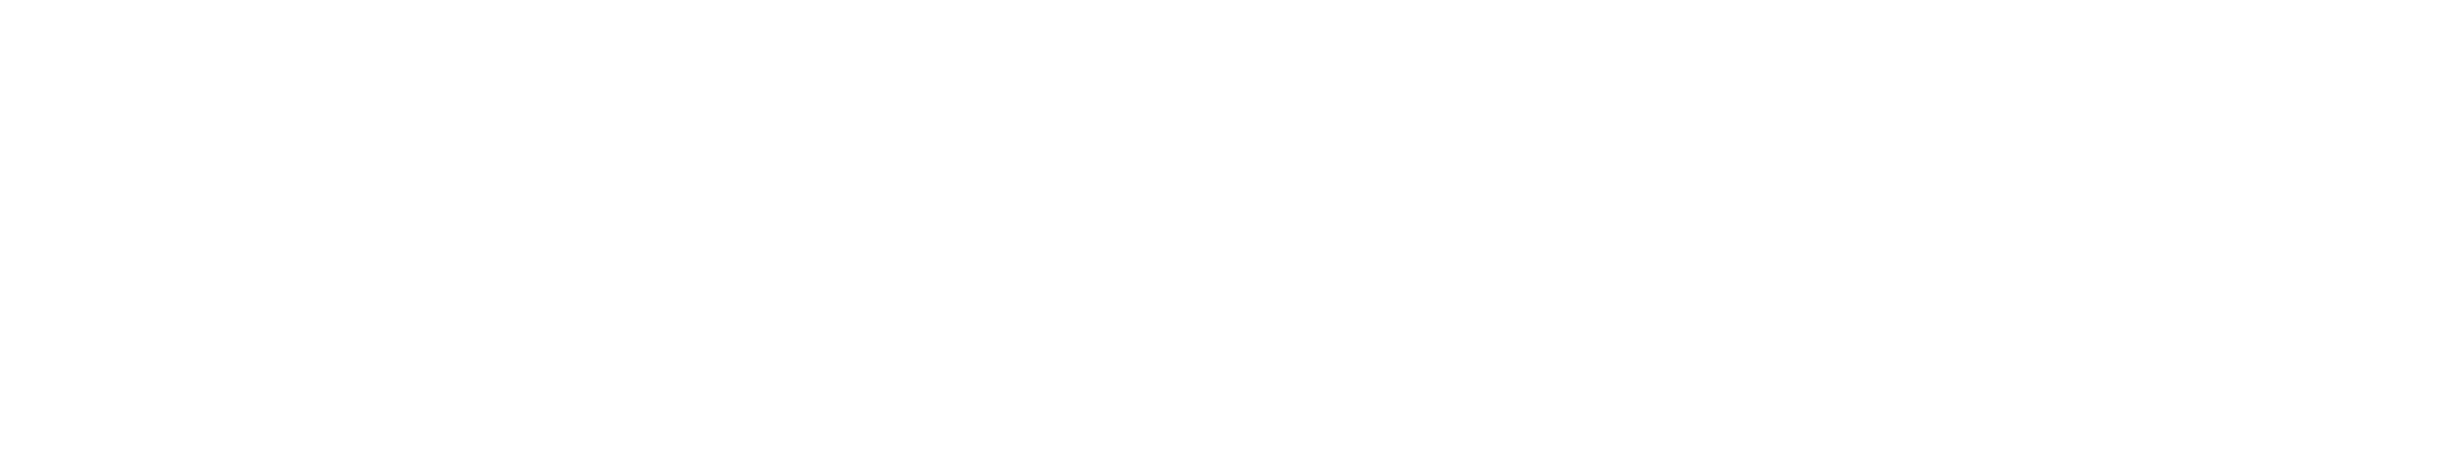 World Scout Conference Egypt 2024 VMS Portal